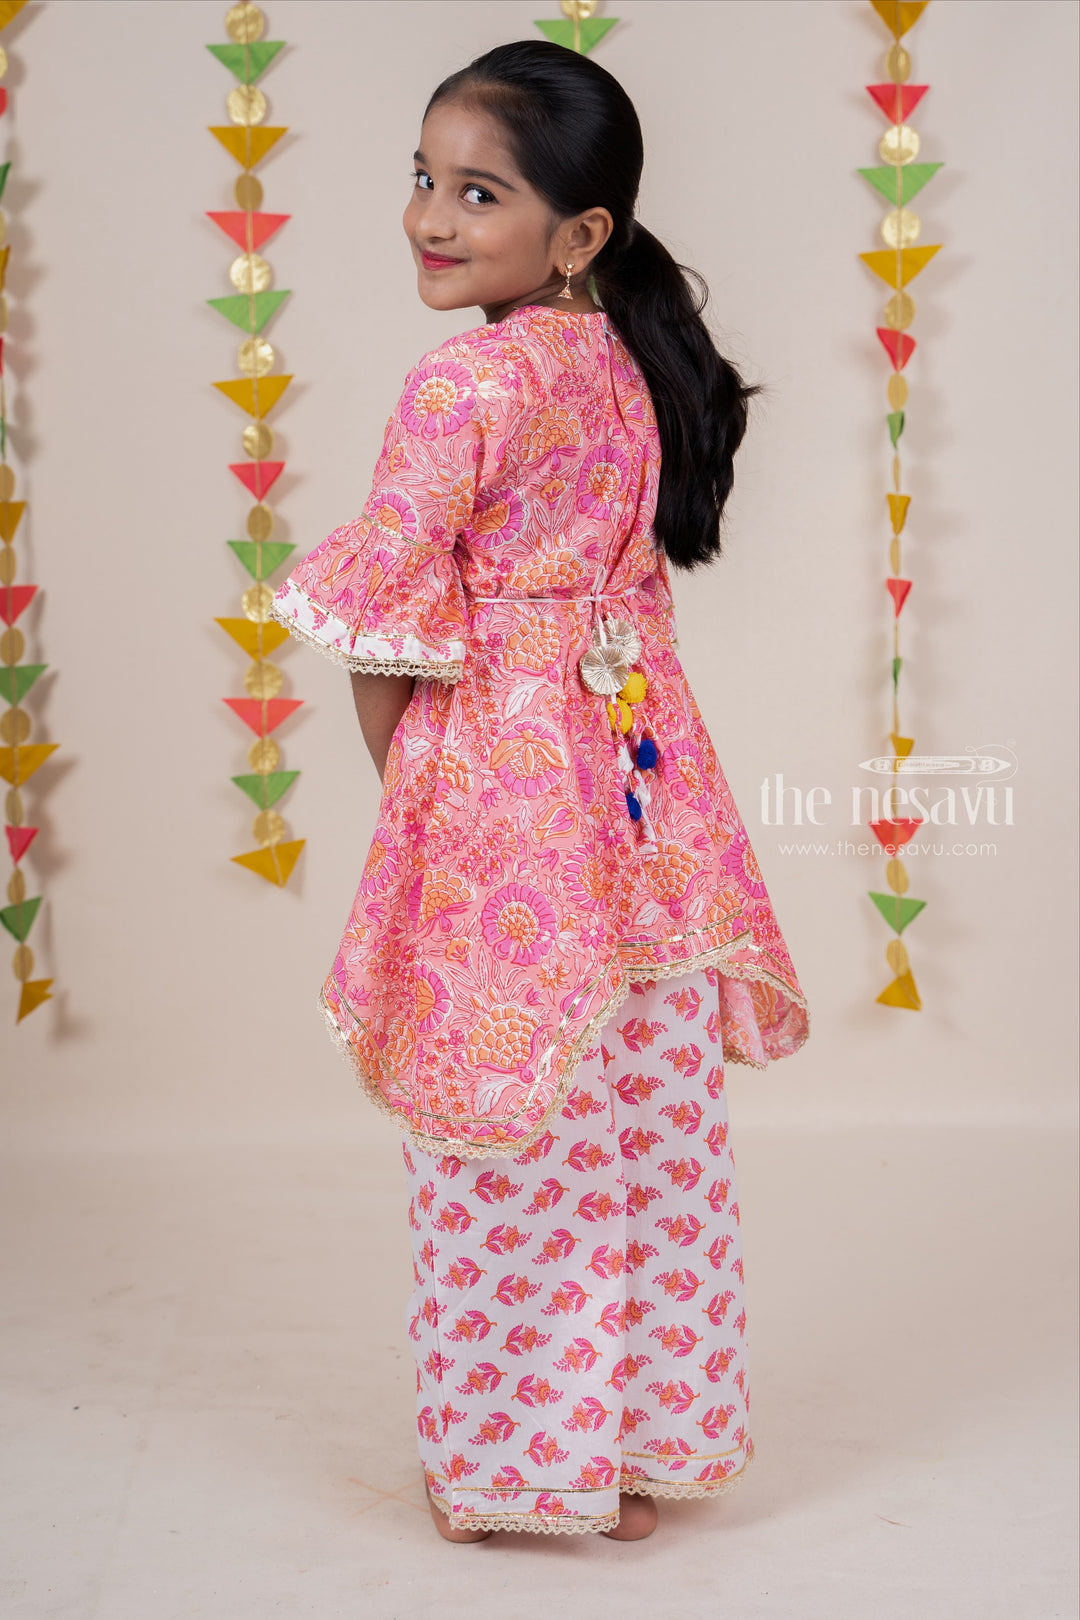 The Nesavu Sets & Suits Pink Designer Tunic Top With Printed Cotton Palazzo For Girls psr silks Nesavu